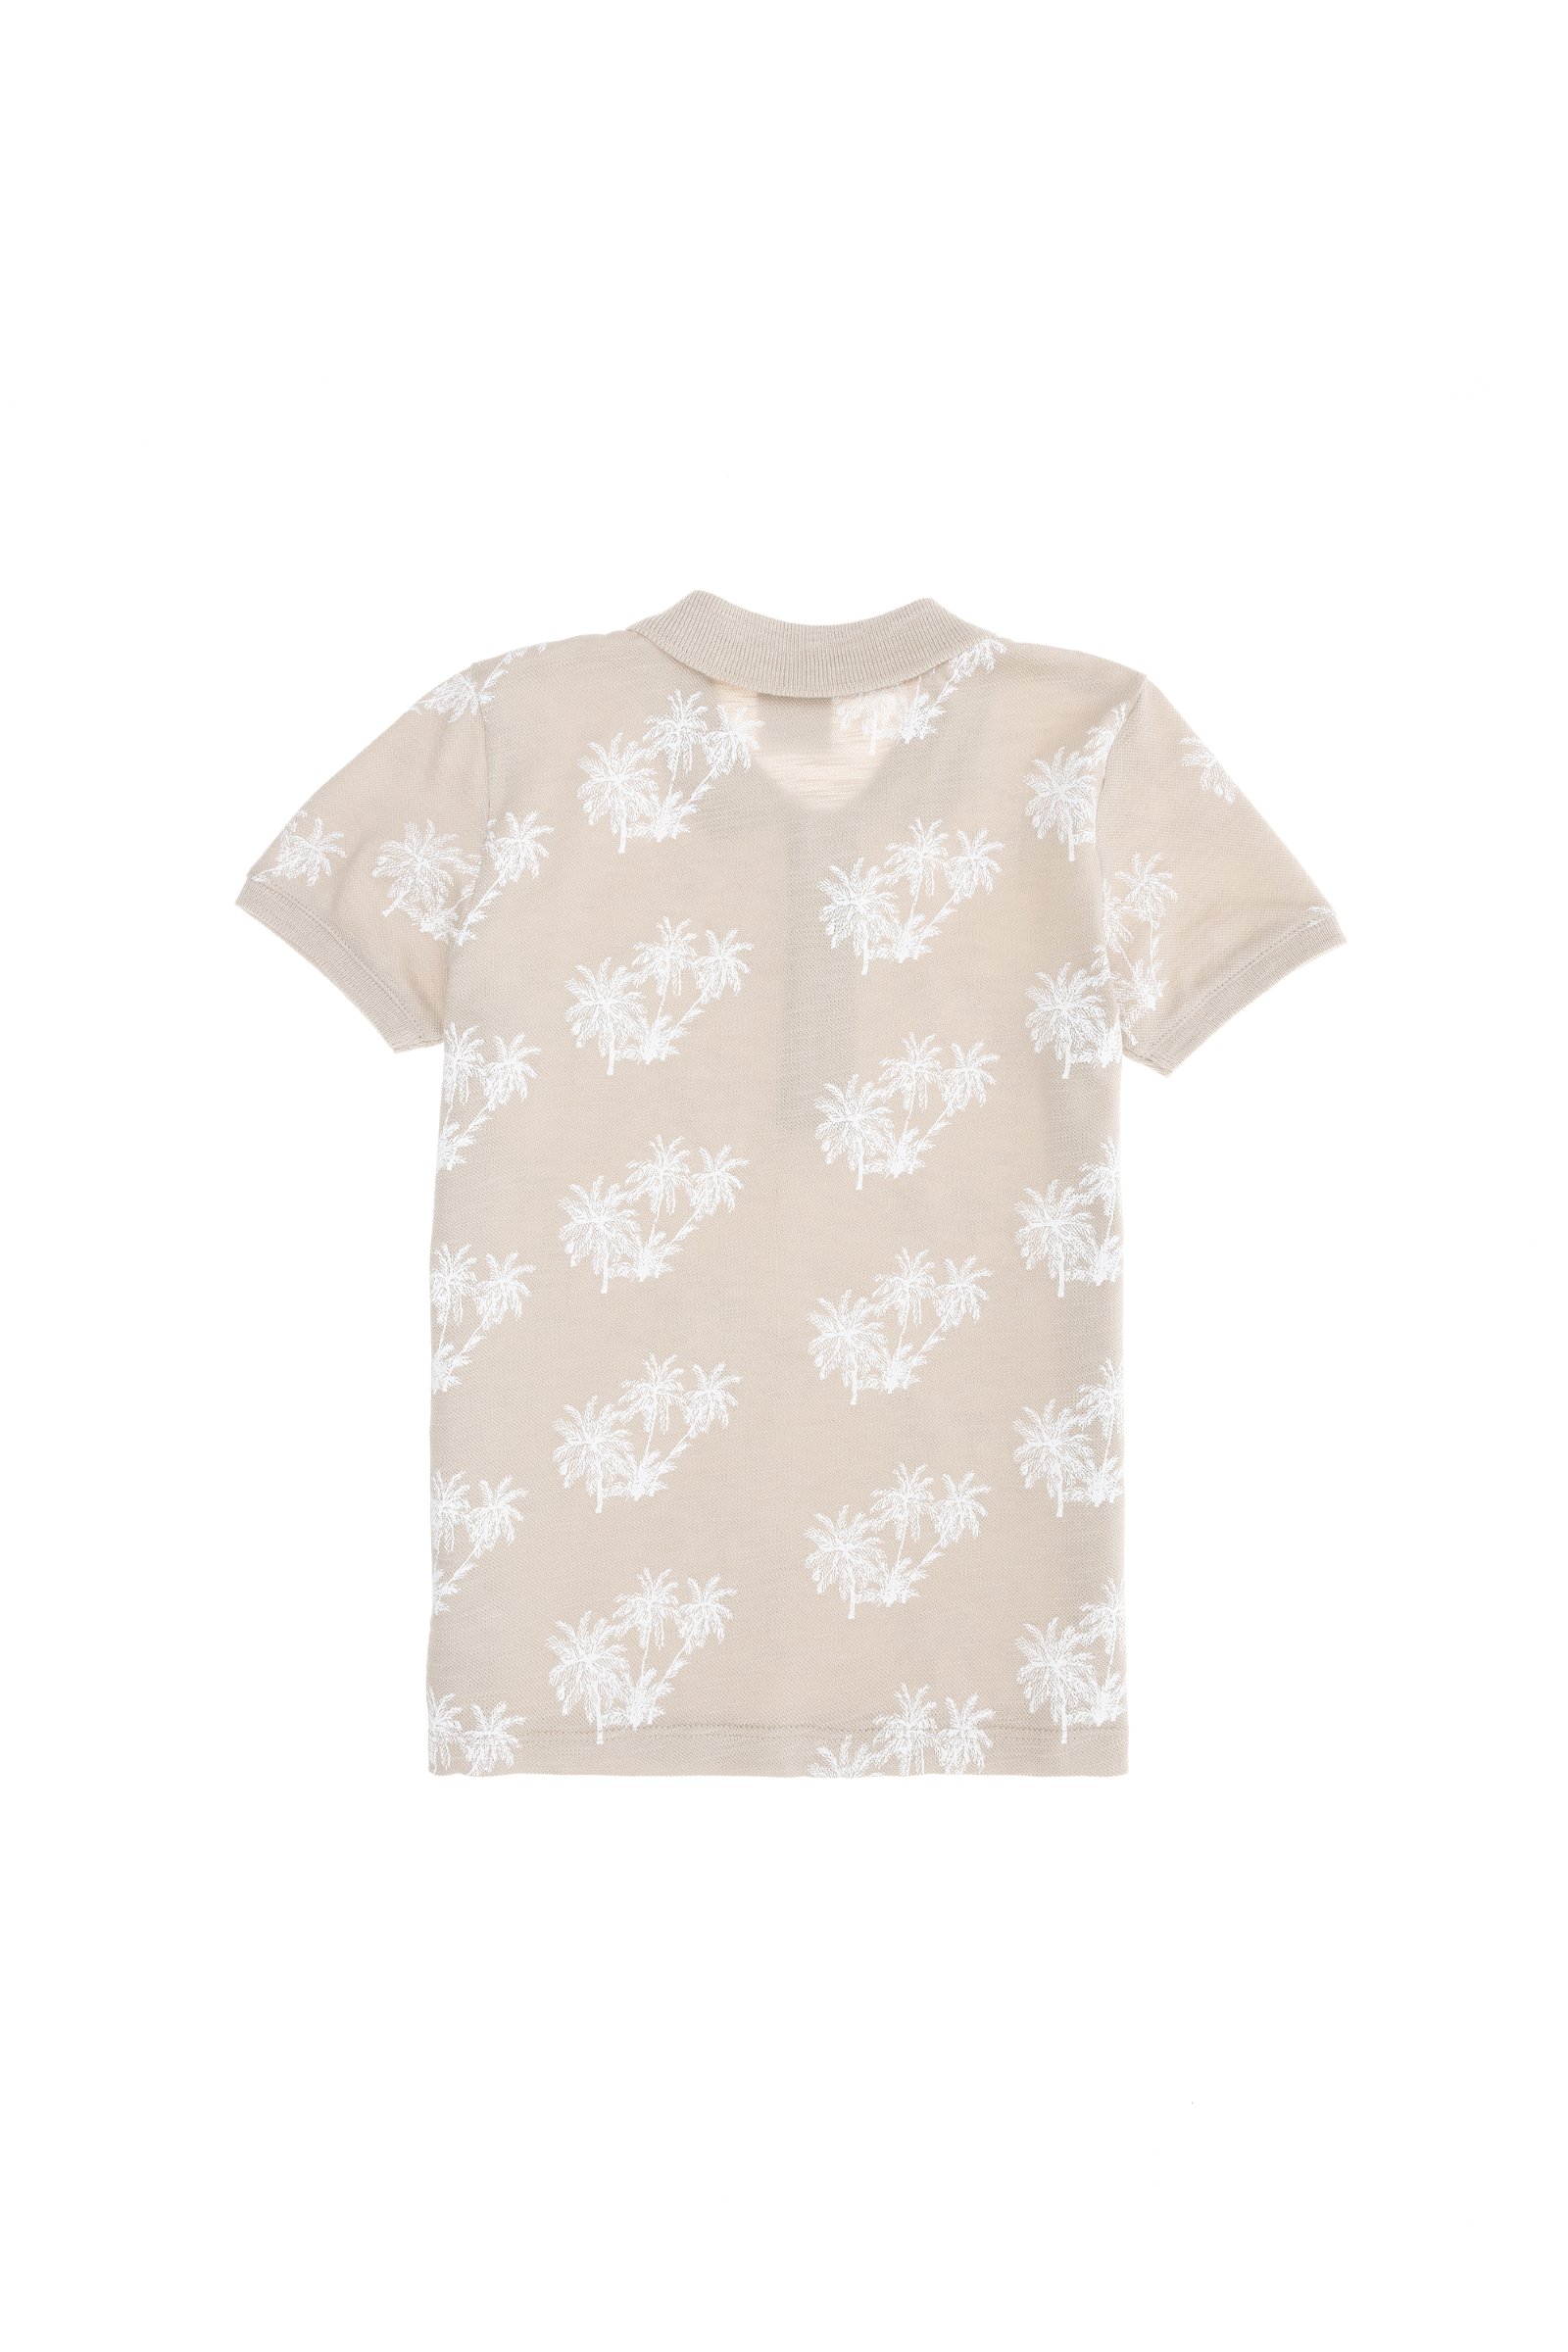 تی شرت یقه پولو خاکستری  استاندارد فیت  پسرانه یو اس پولو | US POLO ASSN